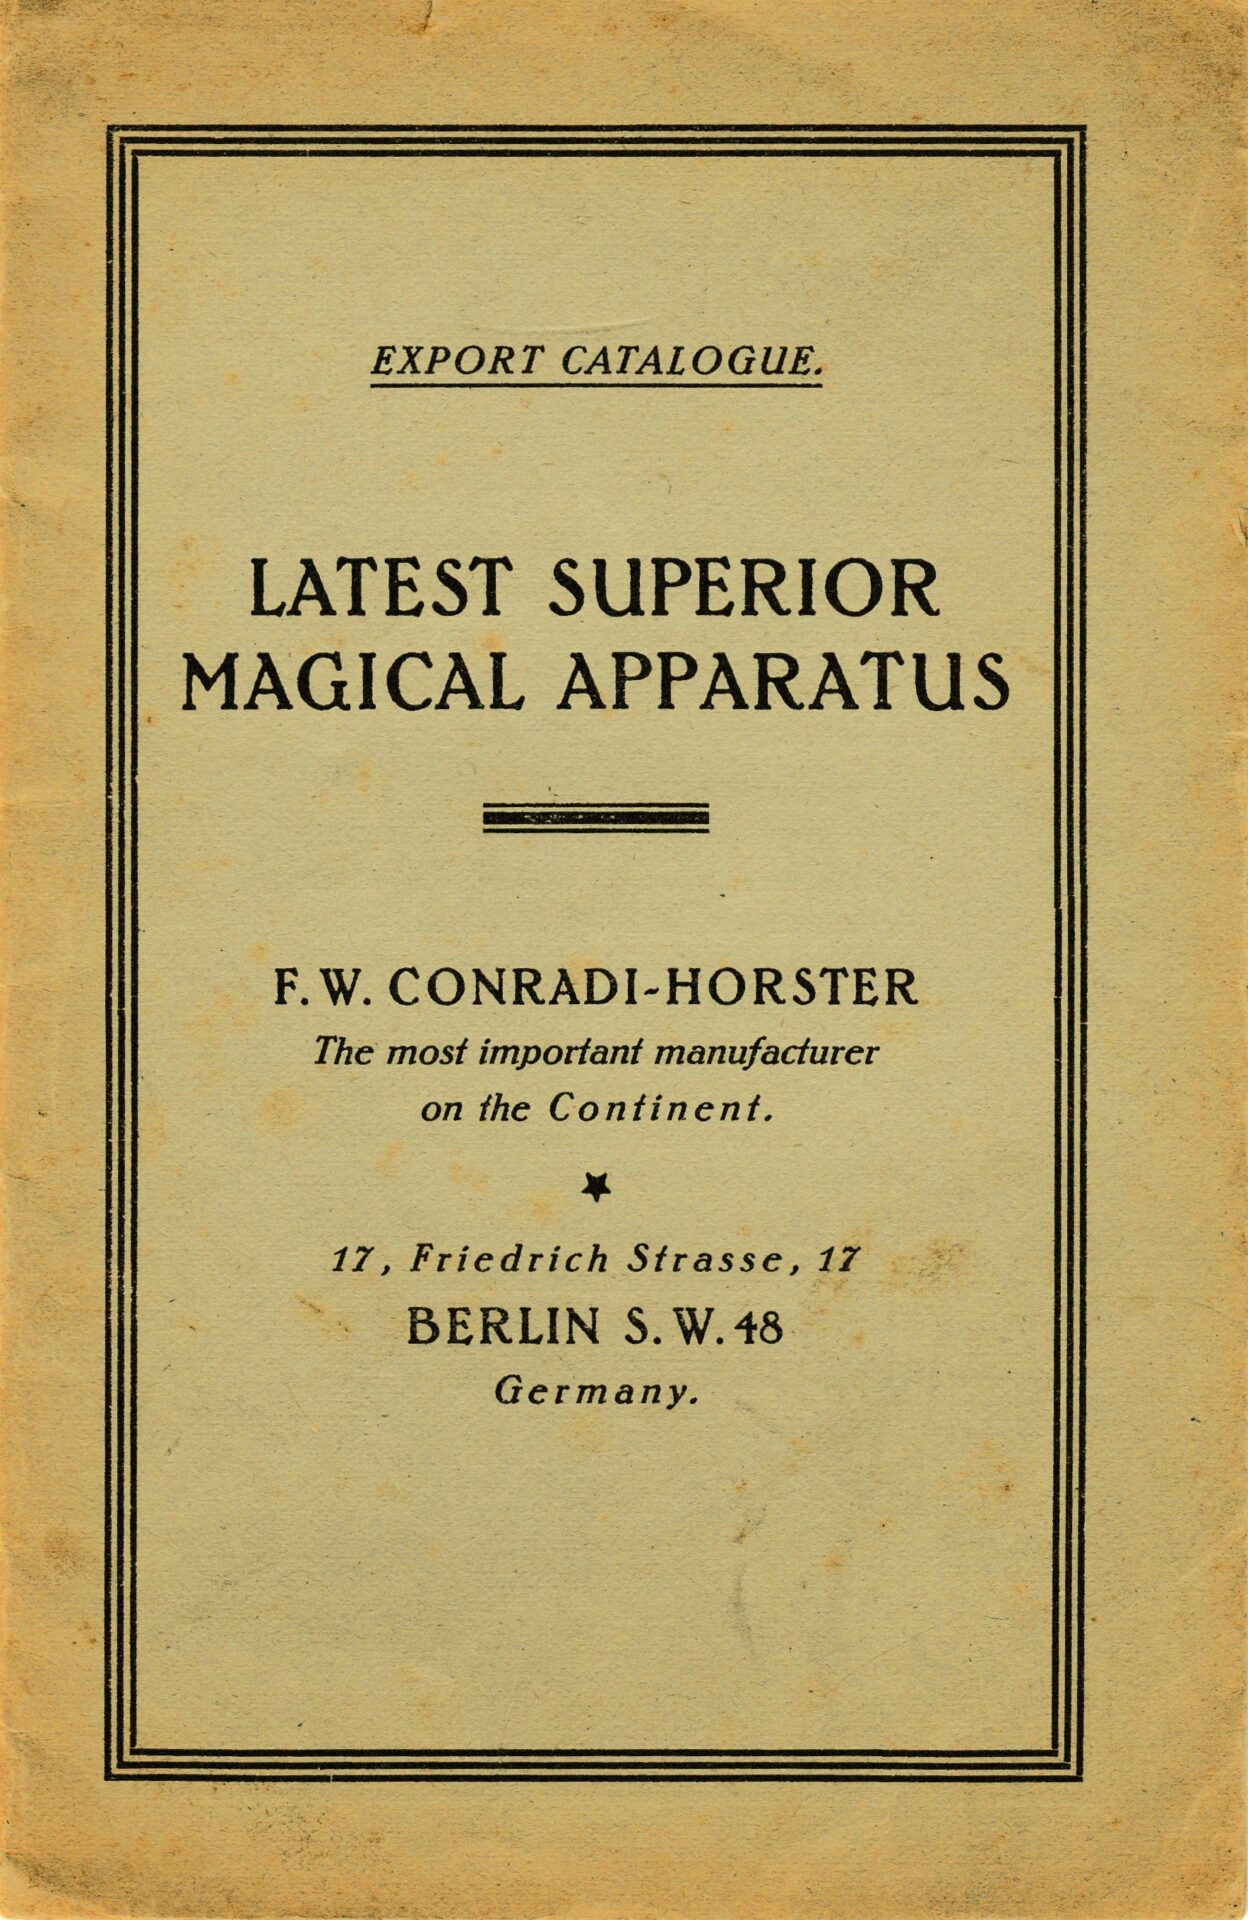 F.W. Conradi-Horster export catalogue circa 1922